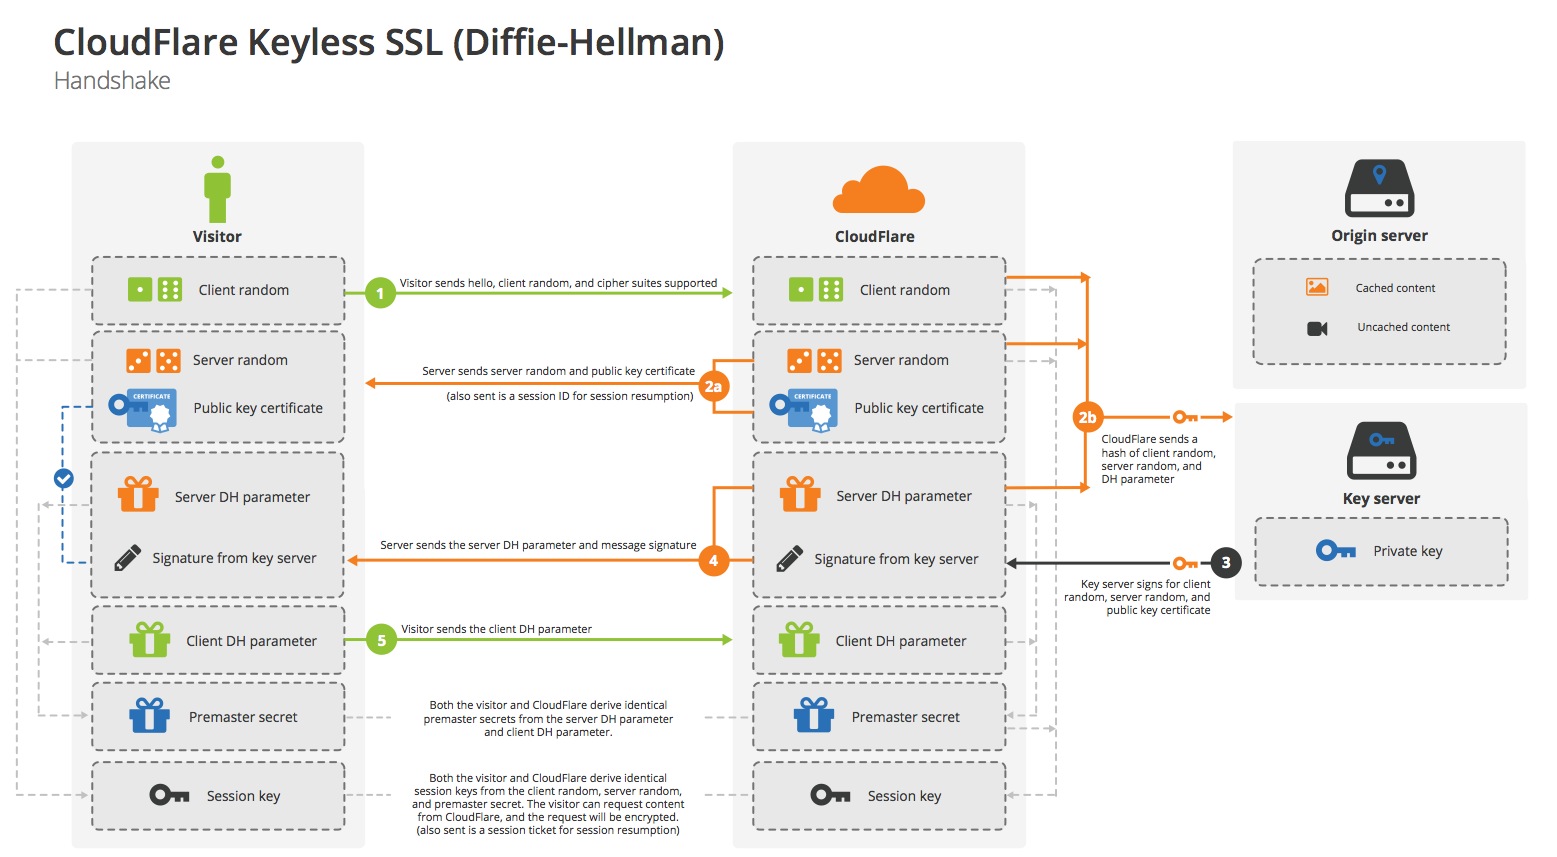 CloudFlare Keyless SSL (DH)